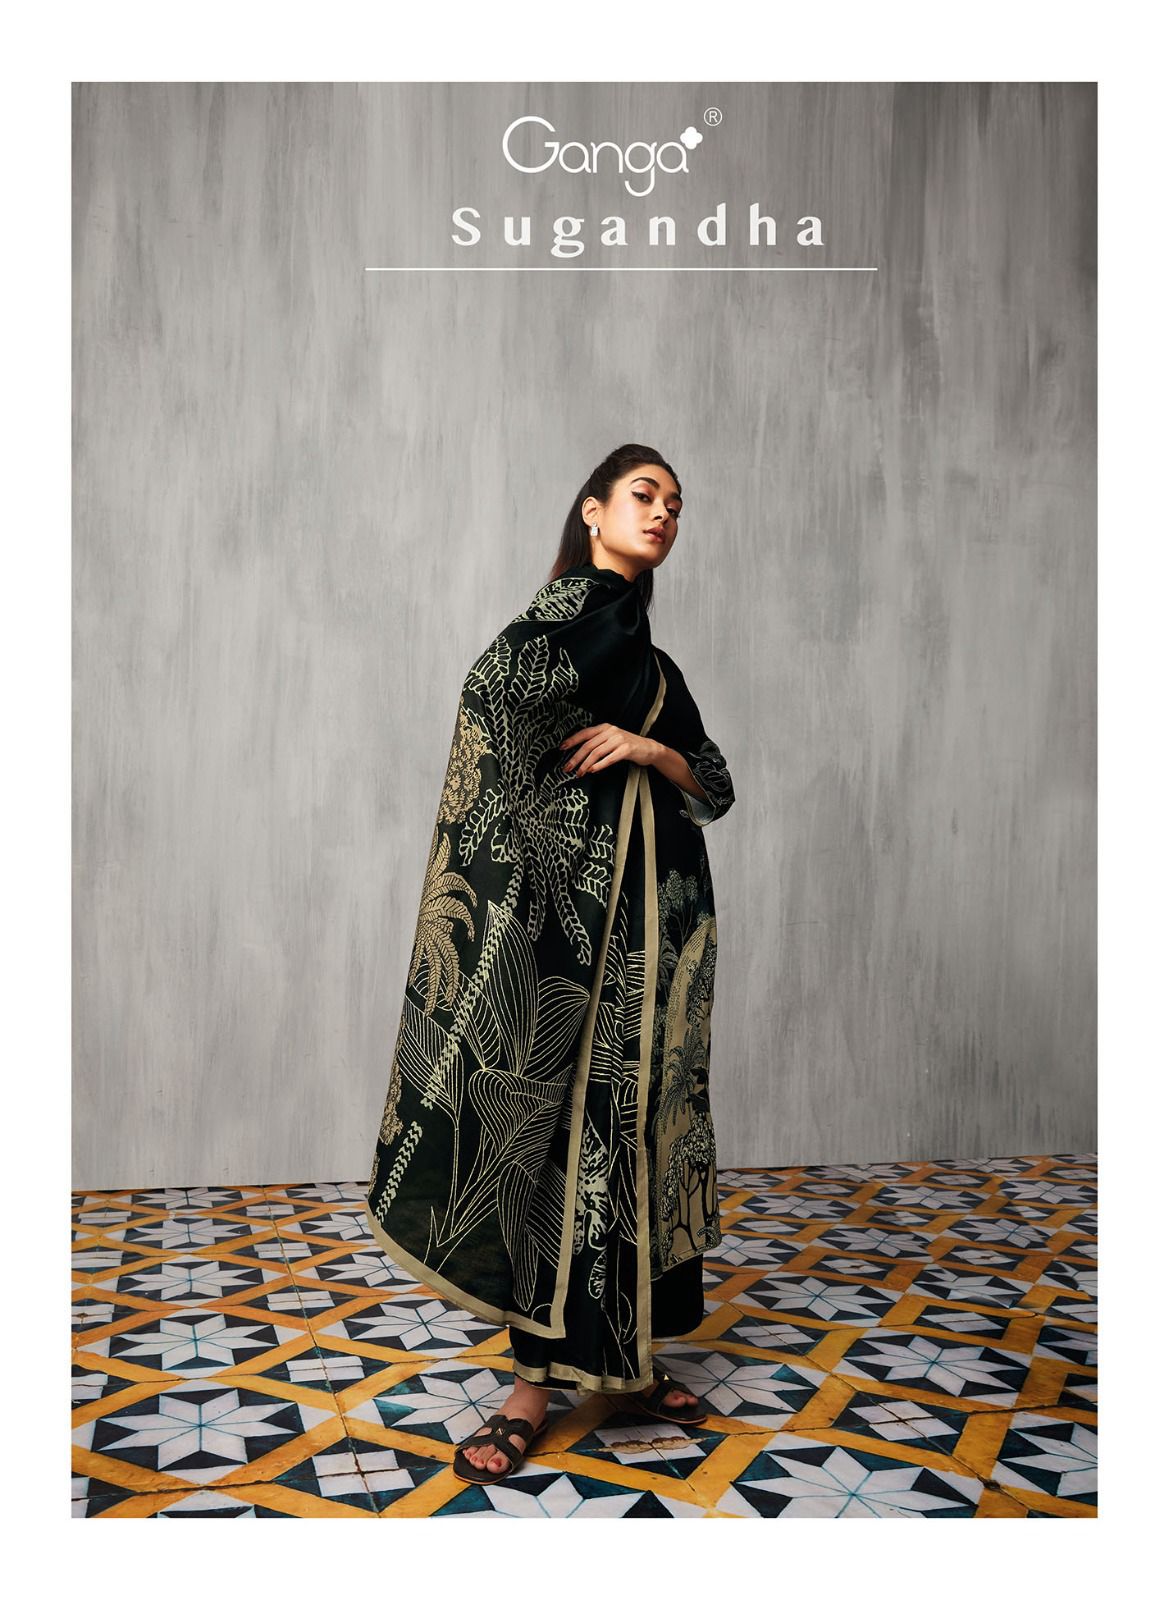 Sugandha Ganga Fancy Plazzo Style Suits